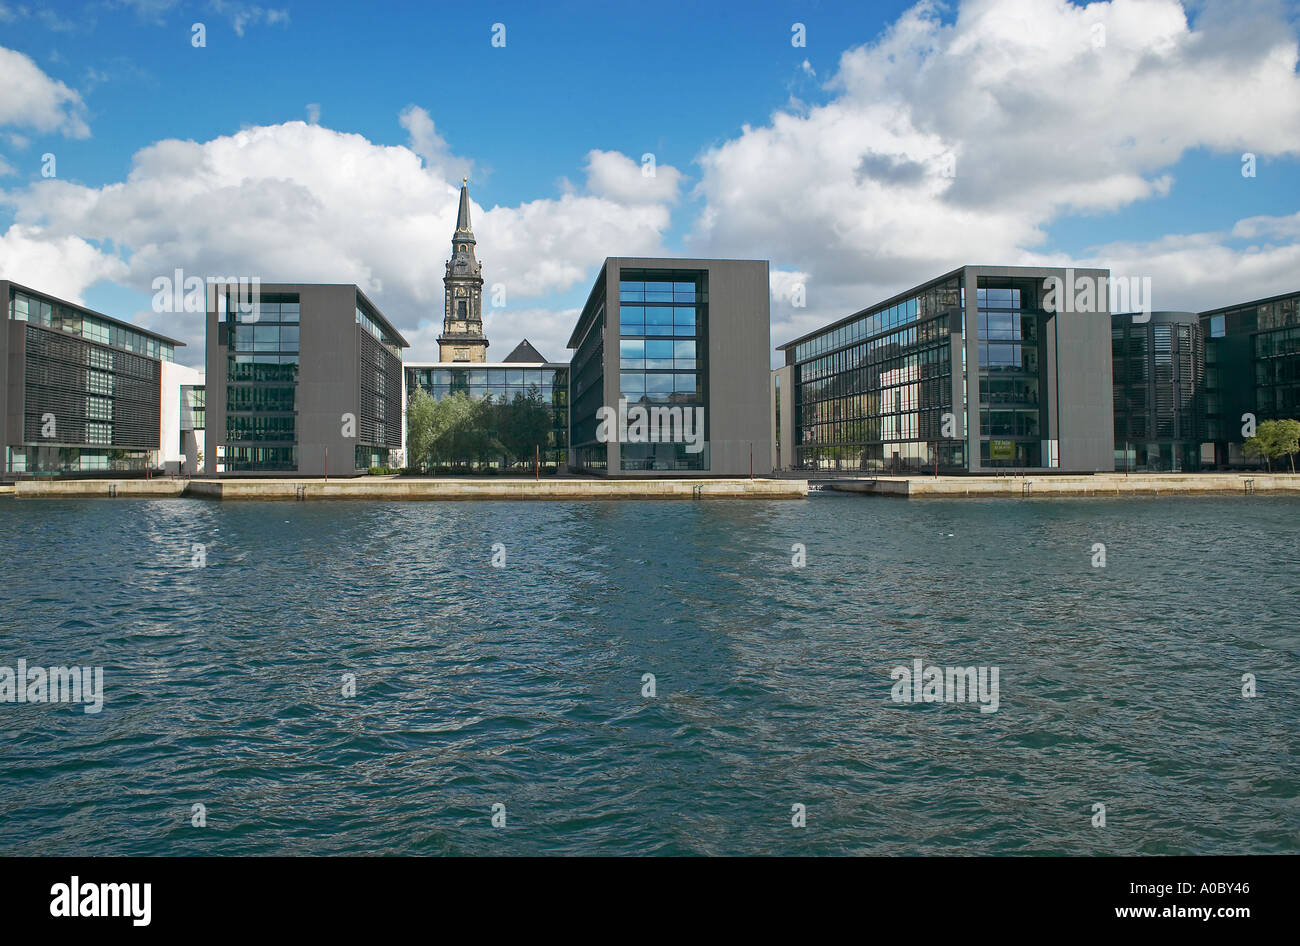 Nordea Bank headquarters buildings and canal, Christianhavn, Copenhagen, Denmark, Europe Stock Photo